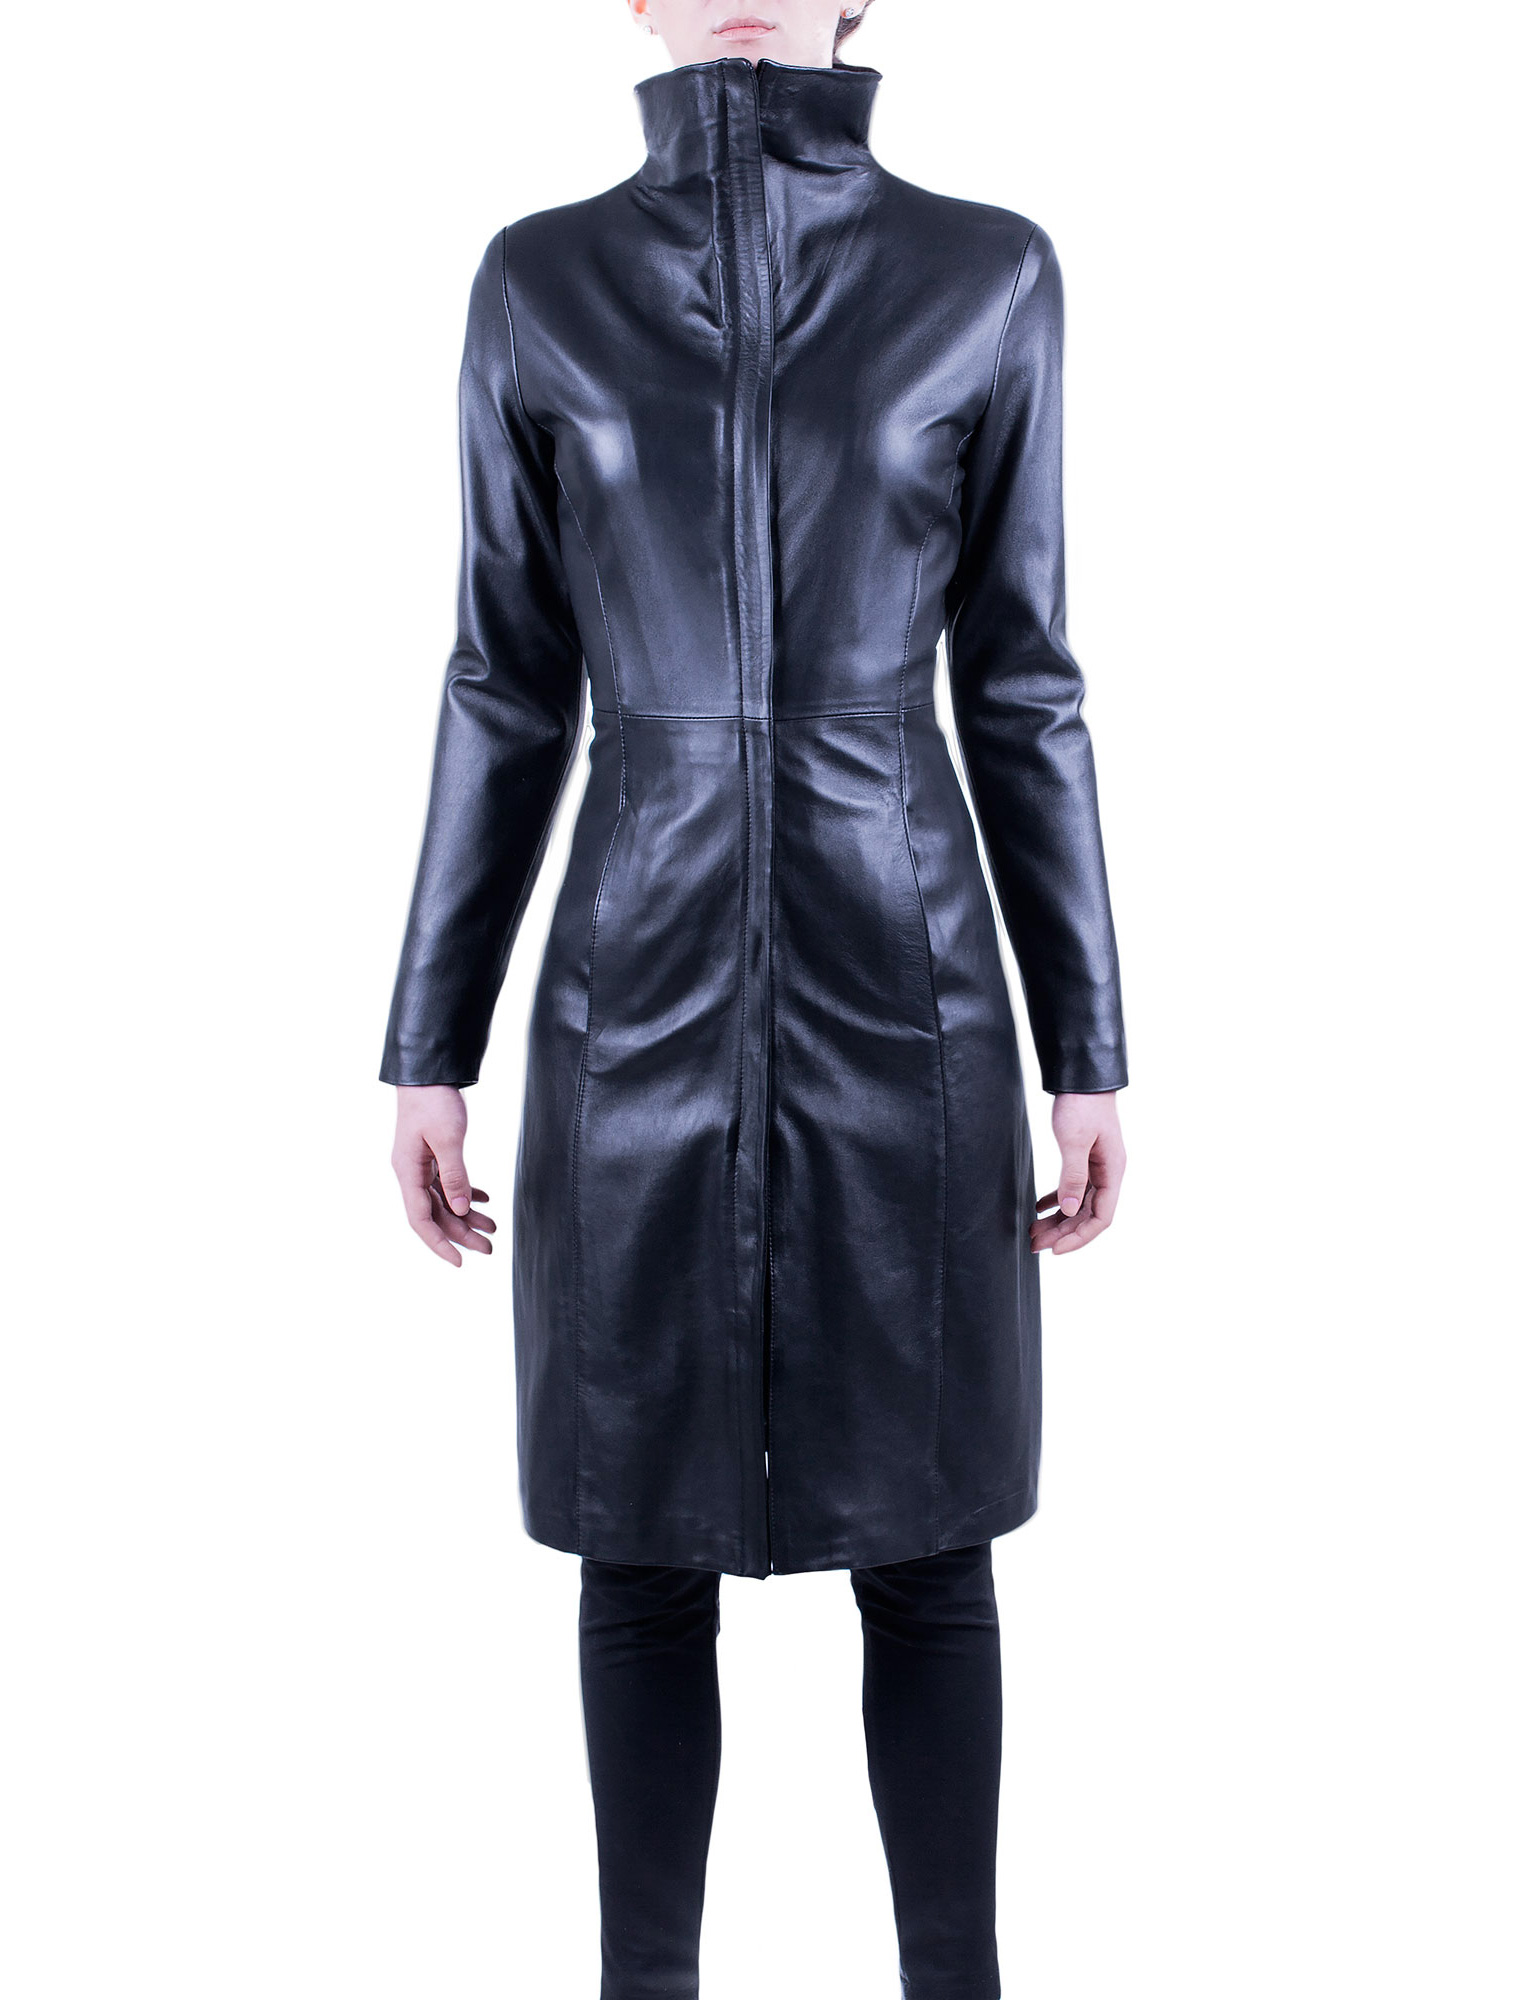 Spaziale Leather Half-Coat - Janni Derma